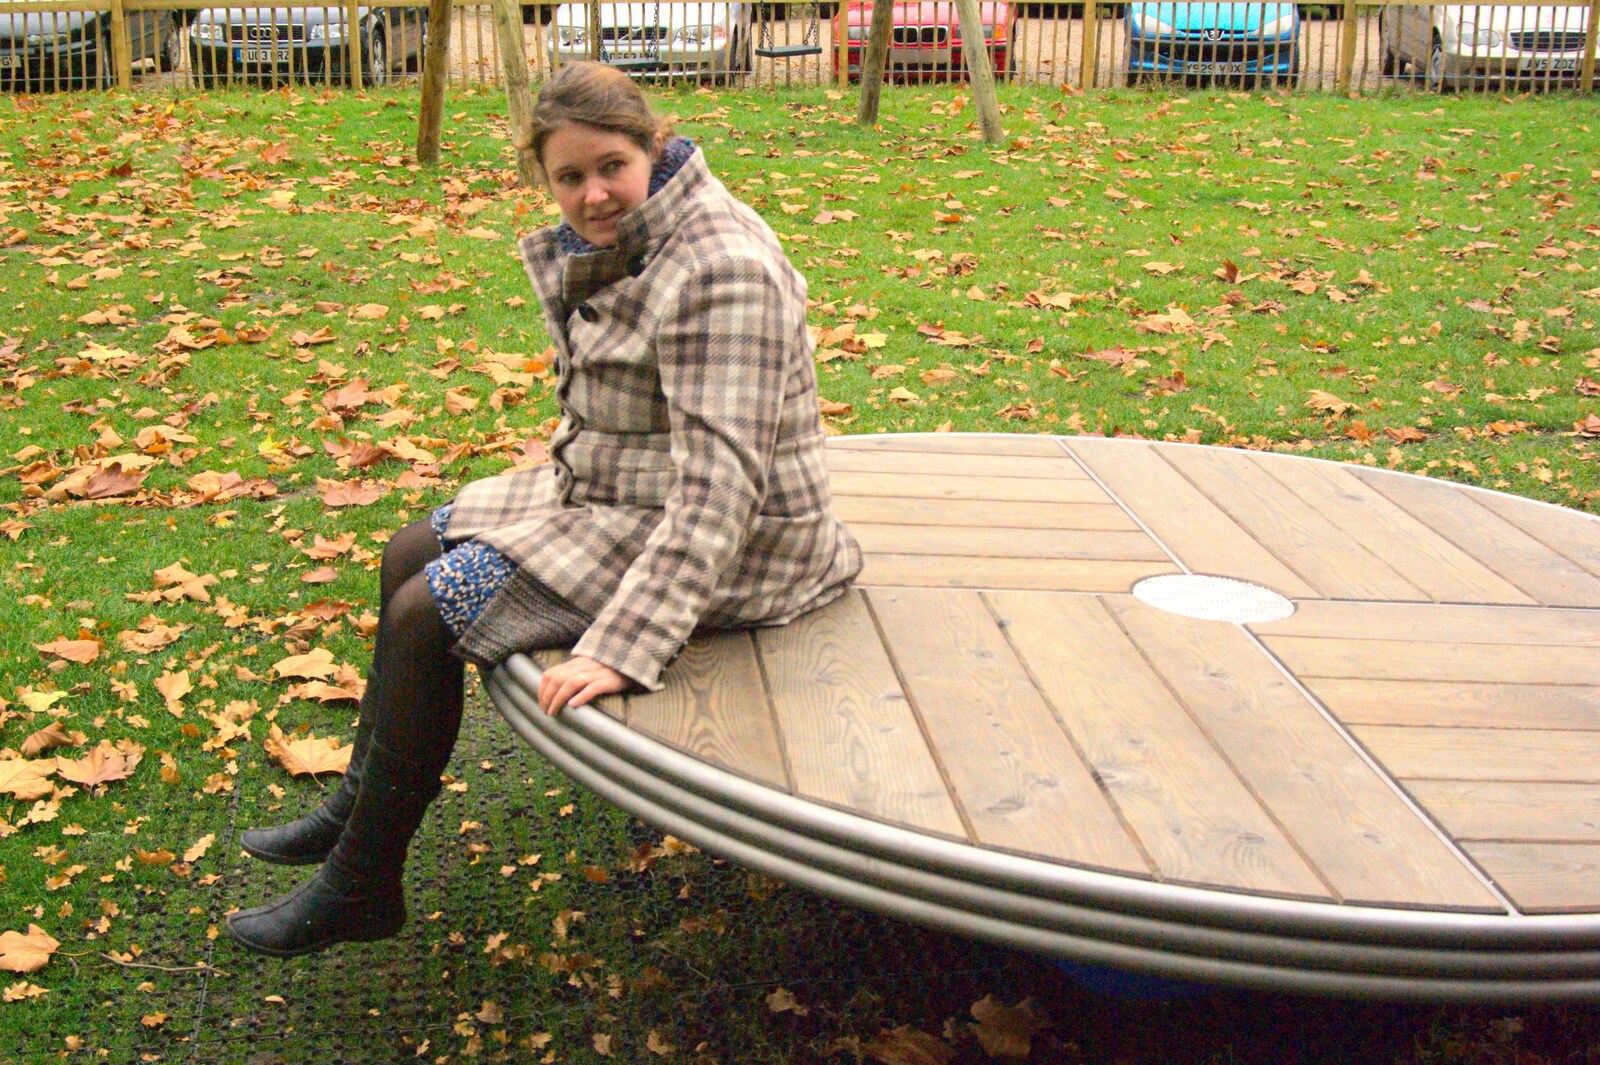 Isobel on a roundabout from Autumn in Thornham Estate, Thornham, Suffolk - 6th November 2011